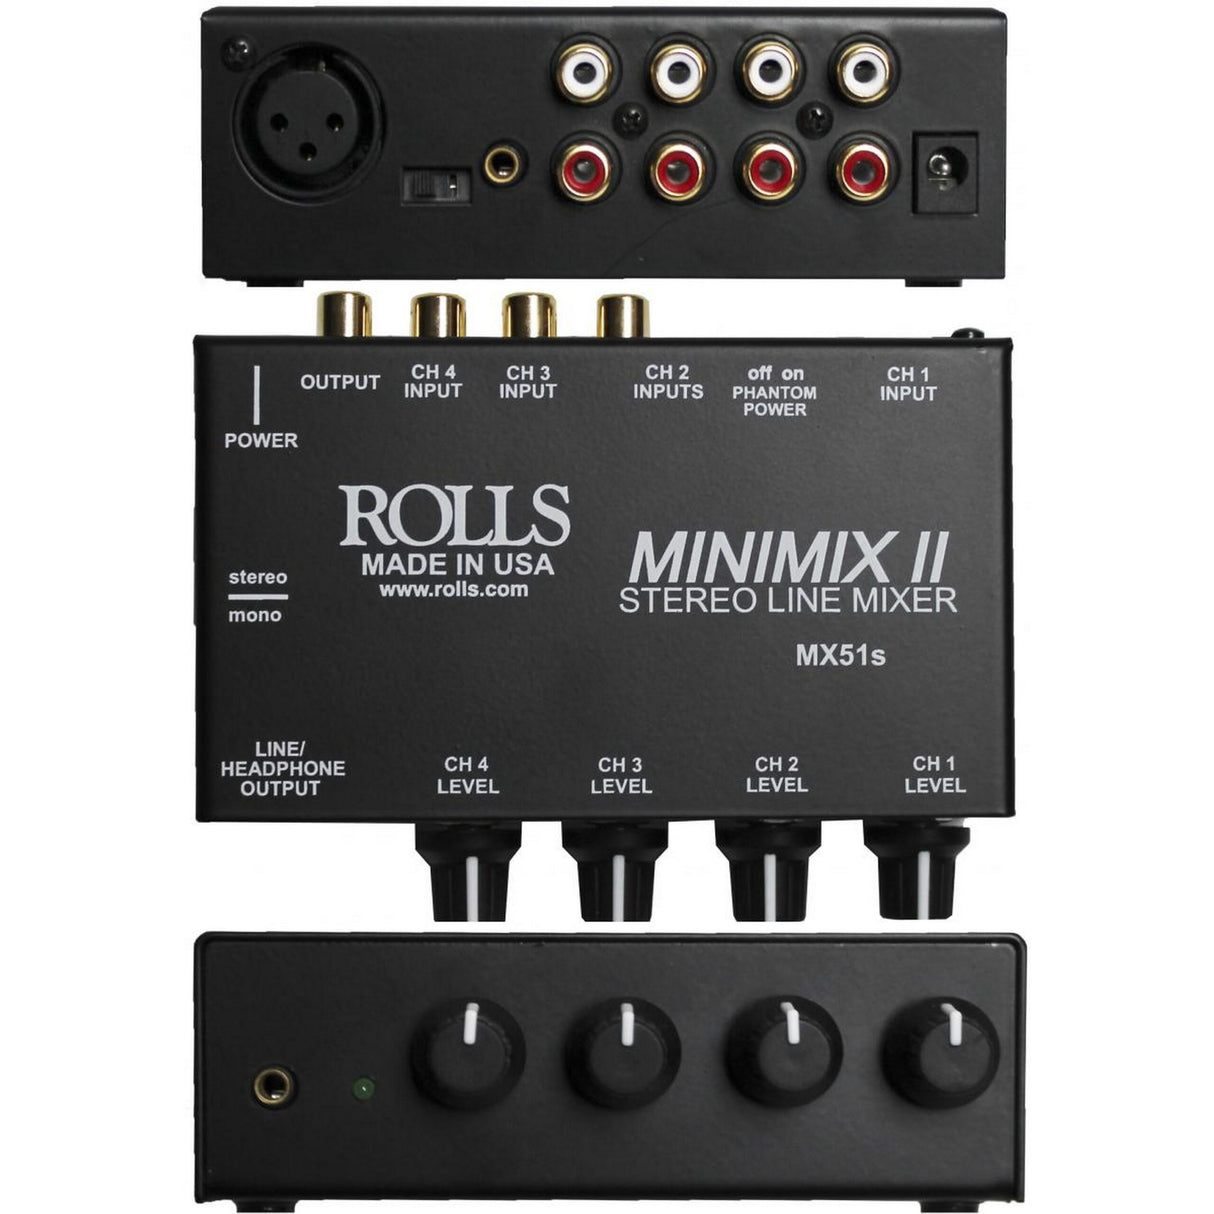 Rolls MX51s Mini Mix 2 Four Channel RCA Mixer (Used)